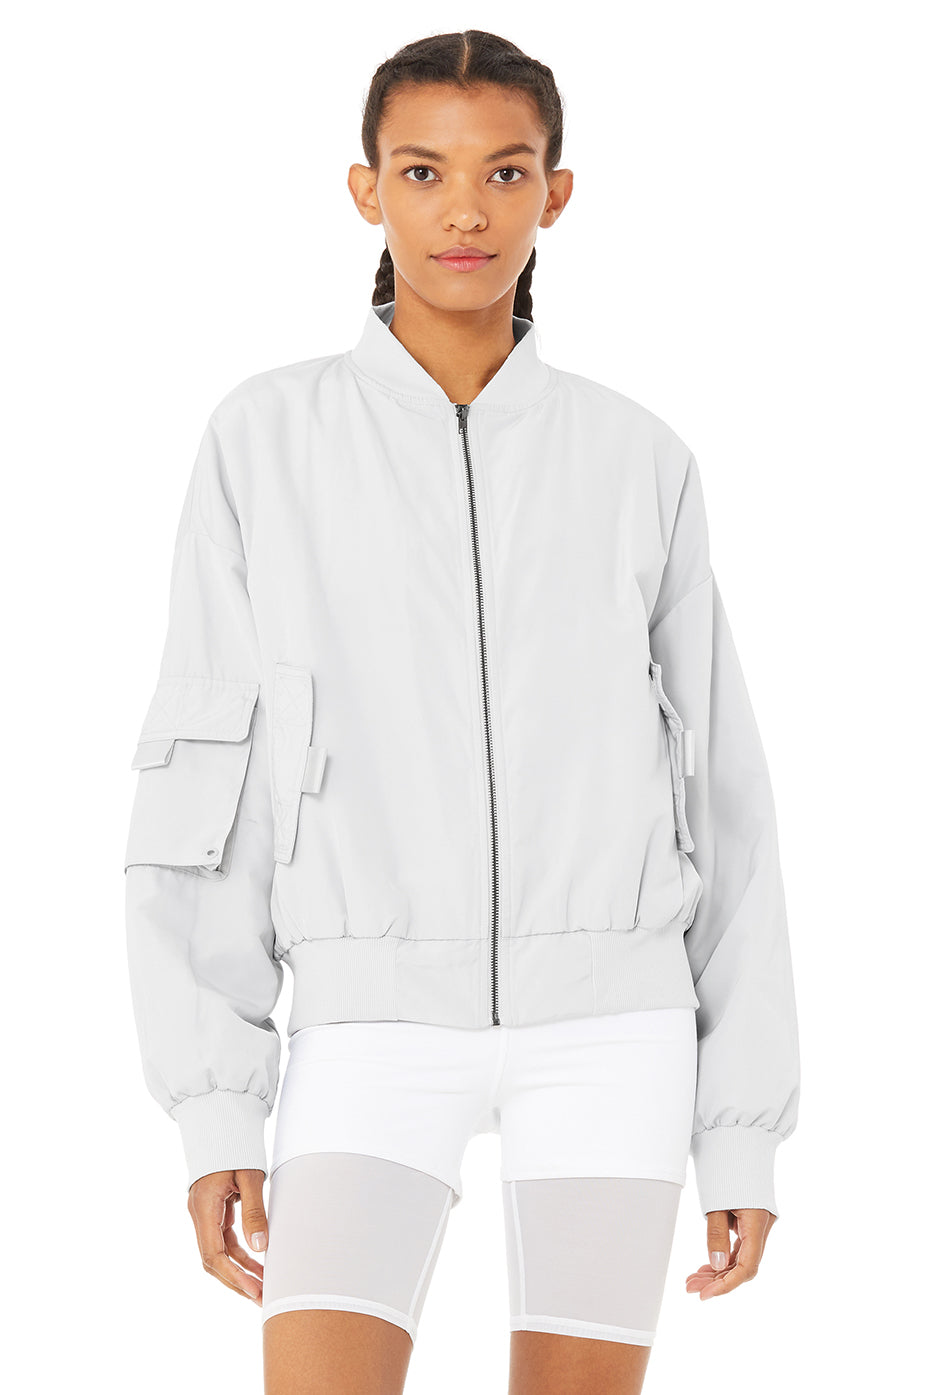 It Girl Bomber Jacket in Dove Grey by Alo Yoga - International